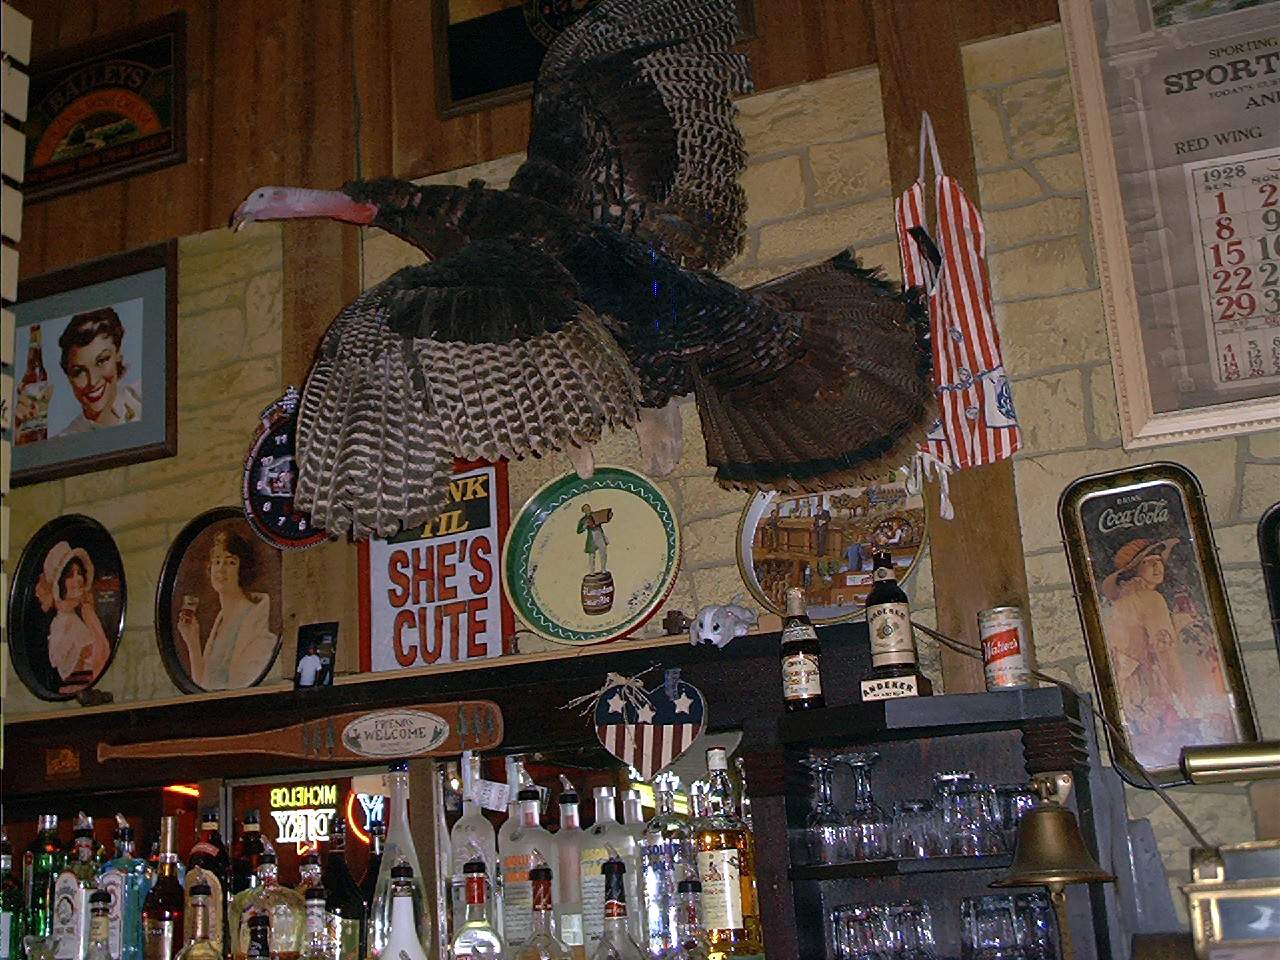 Wild Turkey over a bar